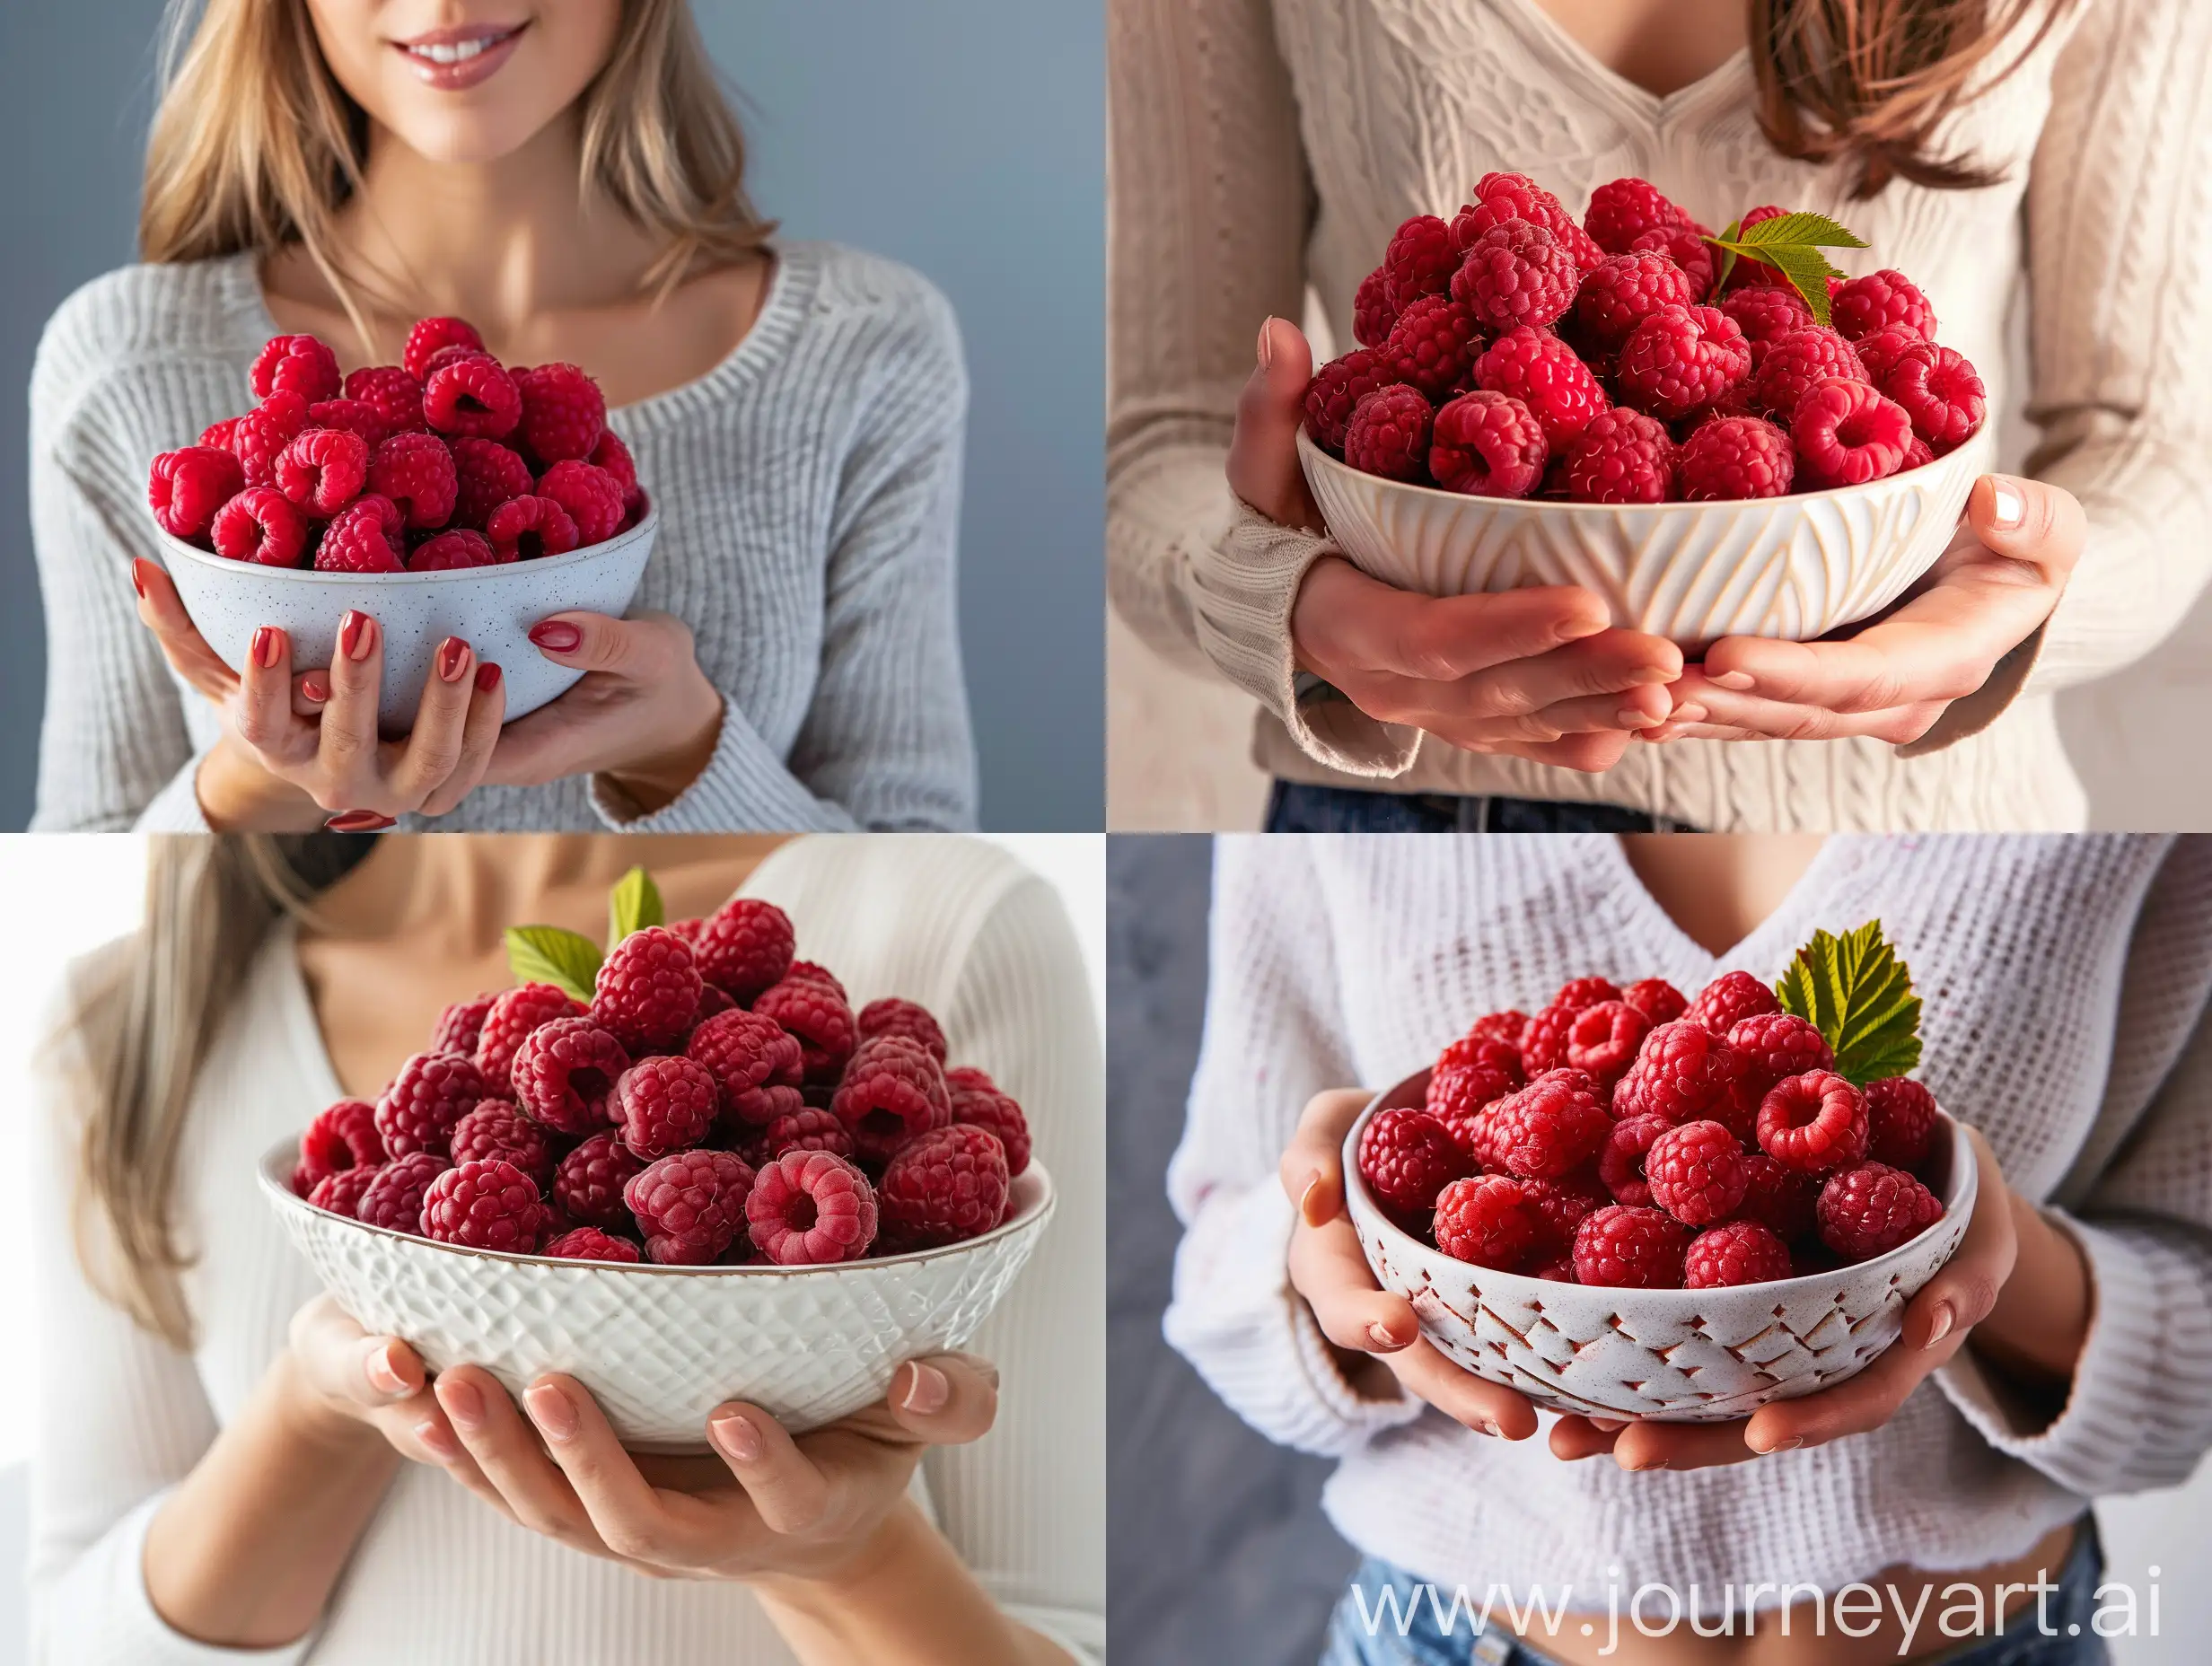 Woman-Holding-Bowl-of-Raspberries-Fresh-Fruit-Advertisement-Image